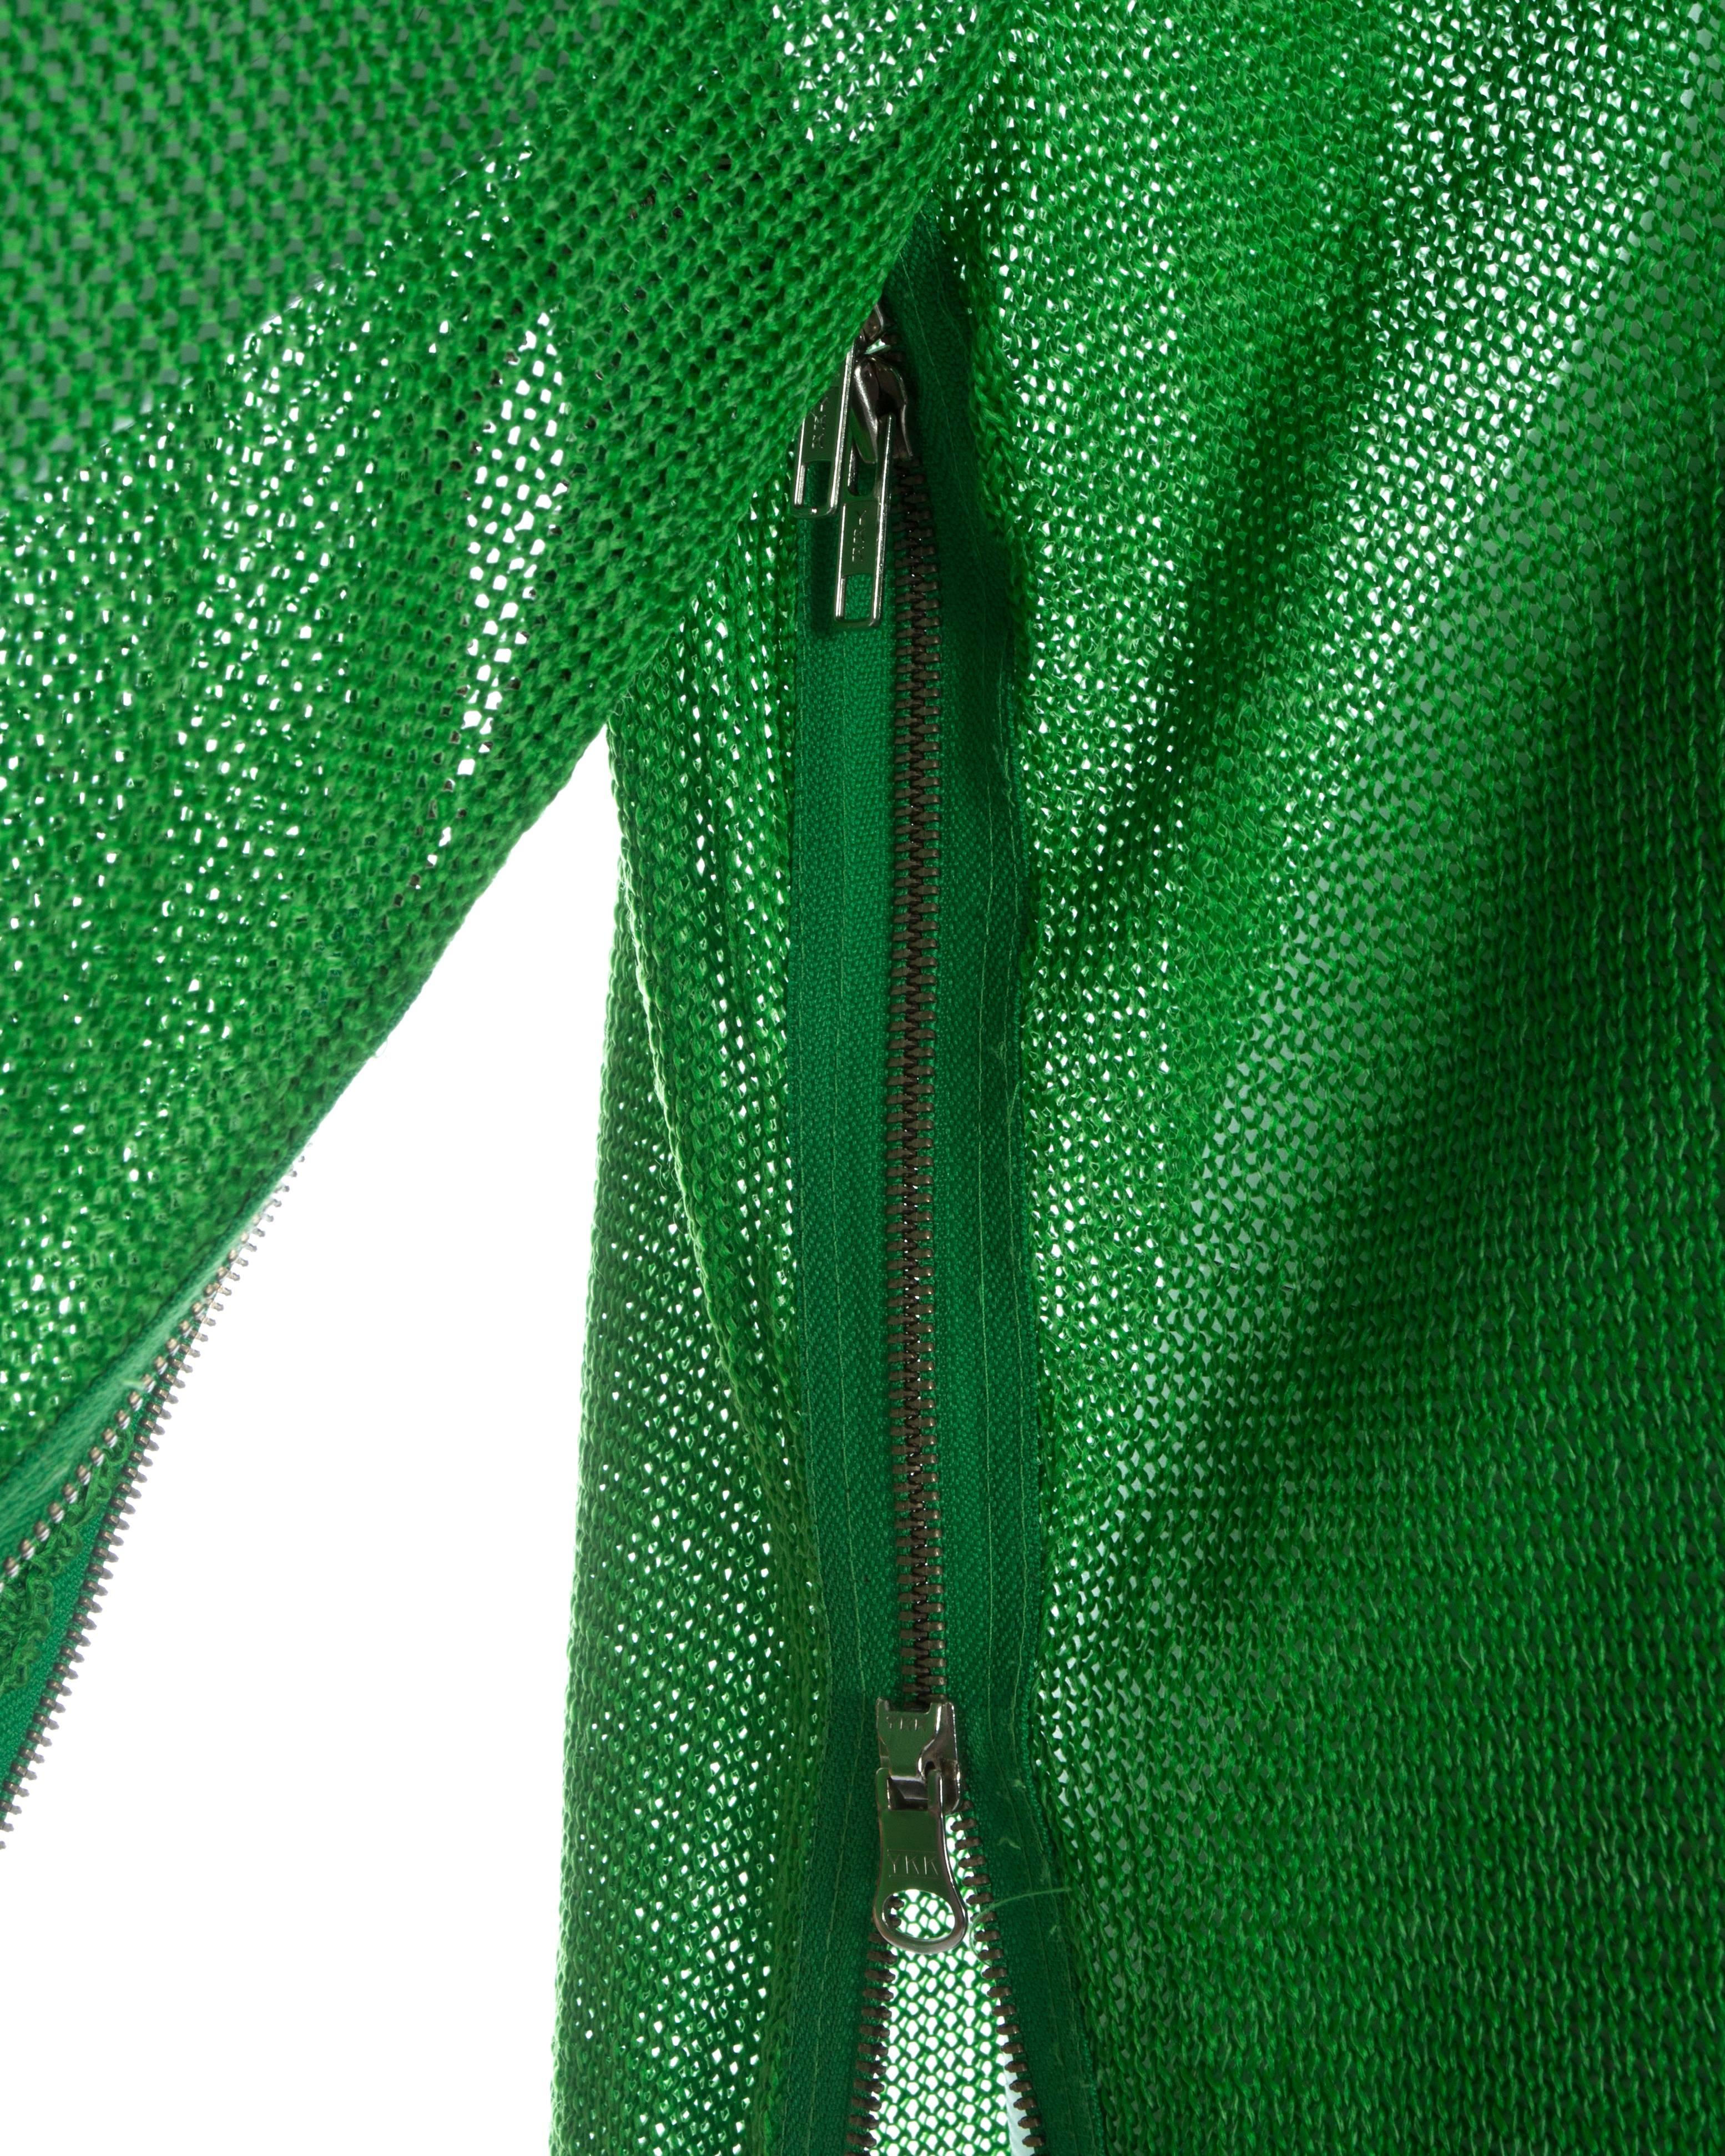 Green Yohji Yamamoto green acrylic knitted oversized sweater with zippers, A / W 1986